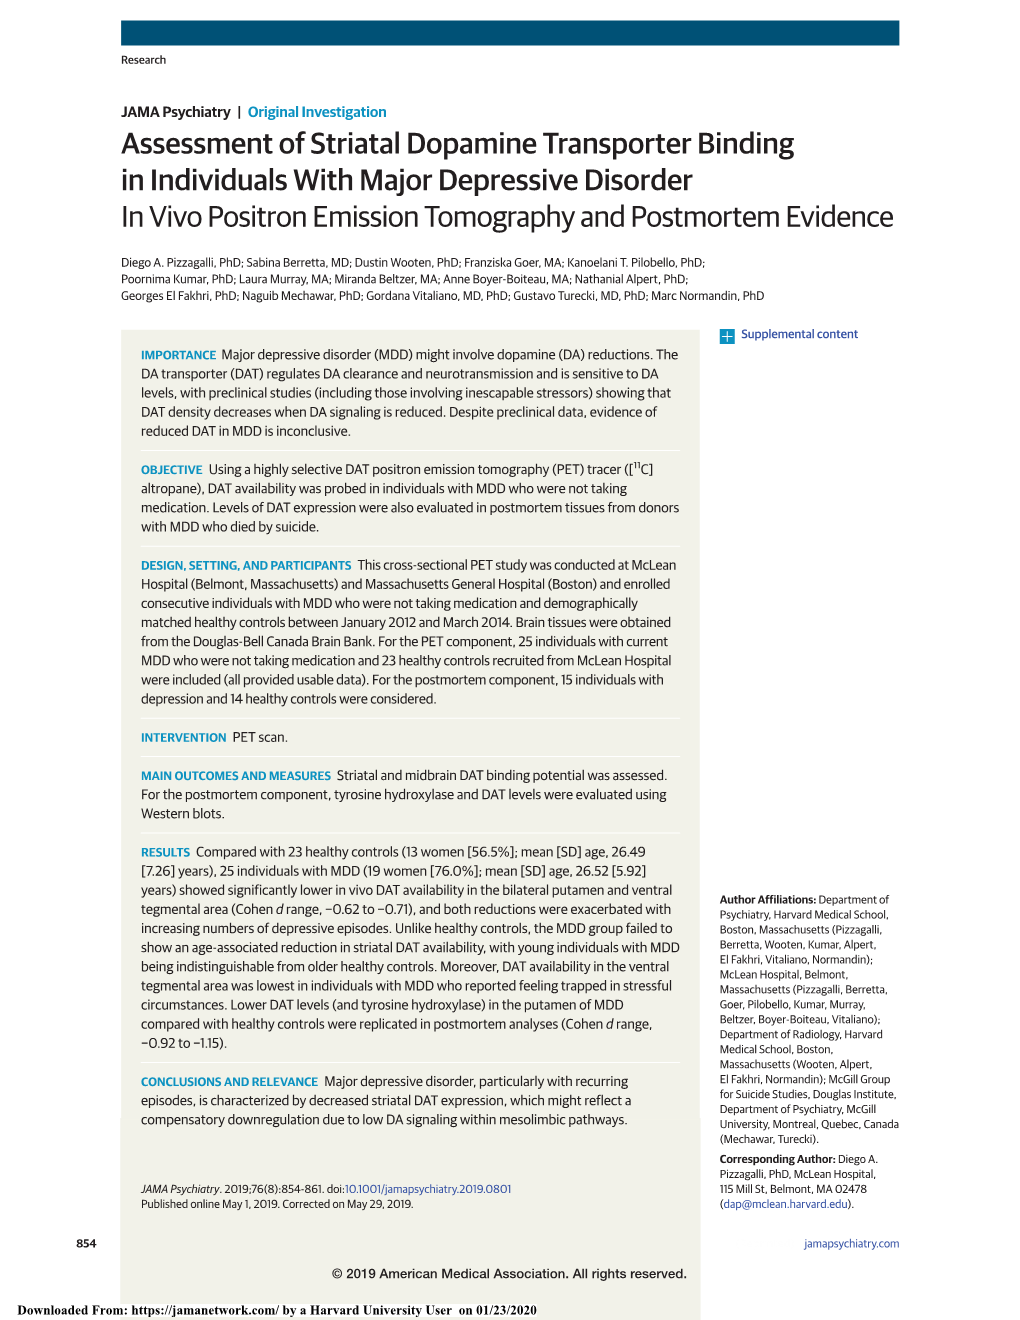 Assessment of Striatal Dopamine Transporter Binding in Individuals with Major Depressive Disorder in Vivo Positron Emission Tomography and Postmortem Evidence